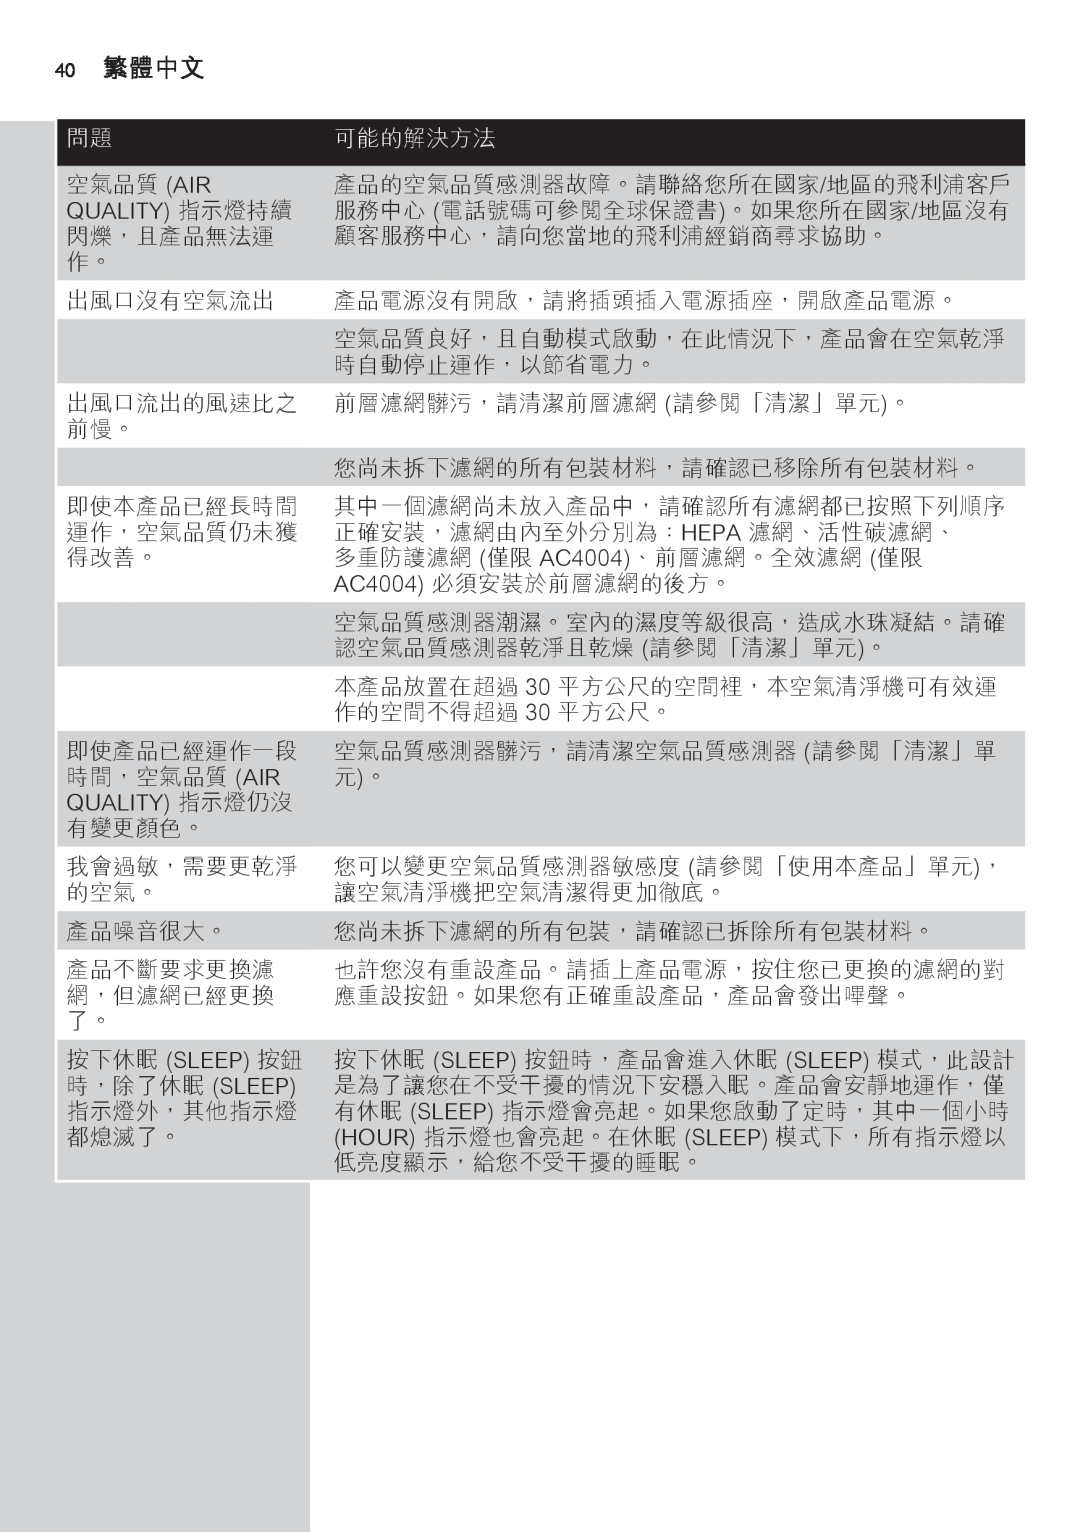 Philips AC4002 manual 40 繁體中文, 可能的解決方法, Quality 指示燈持續, Quality 指示燈仍沒 